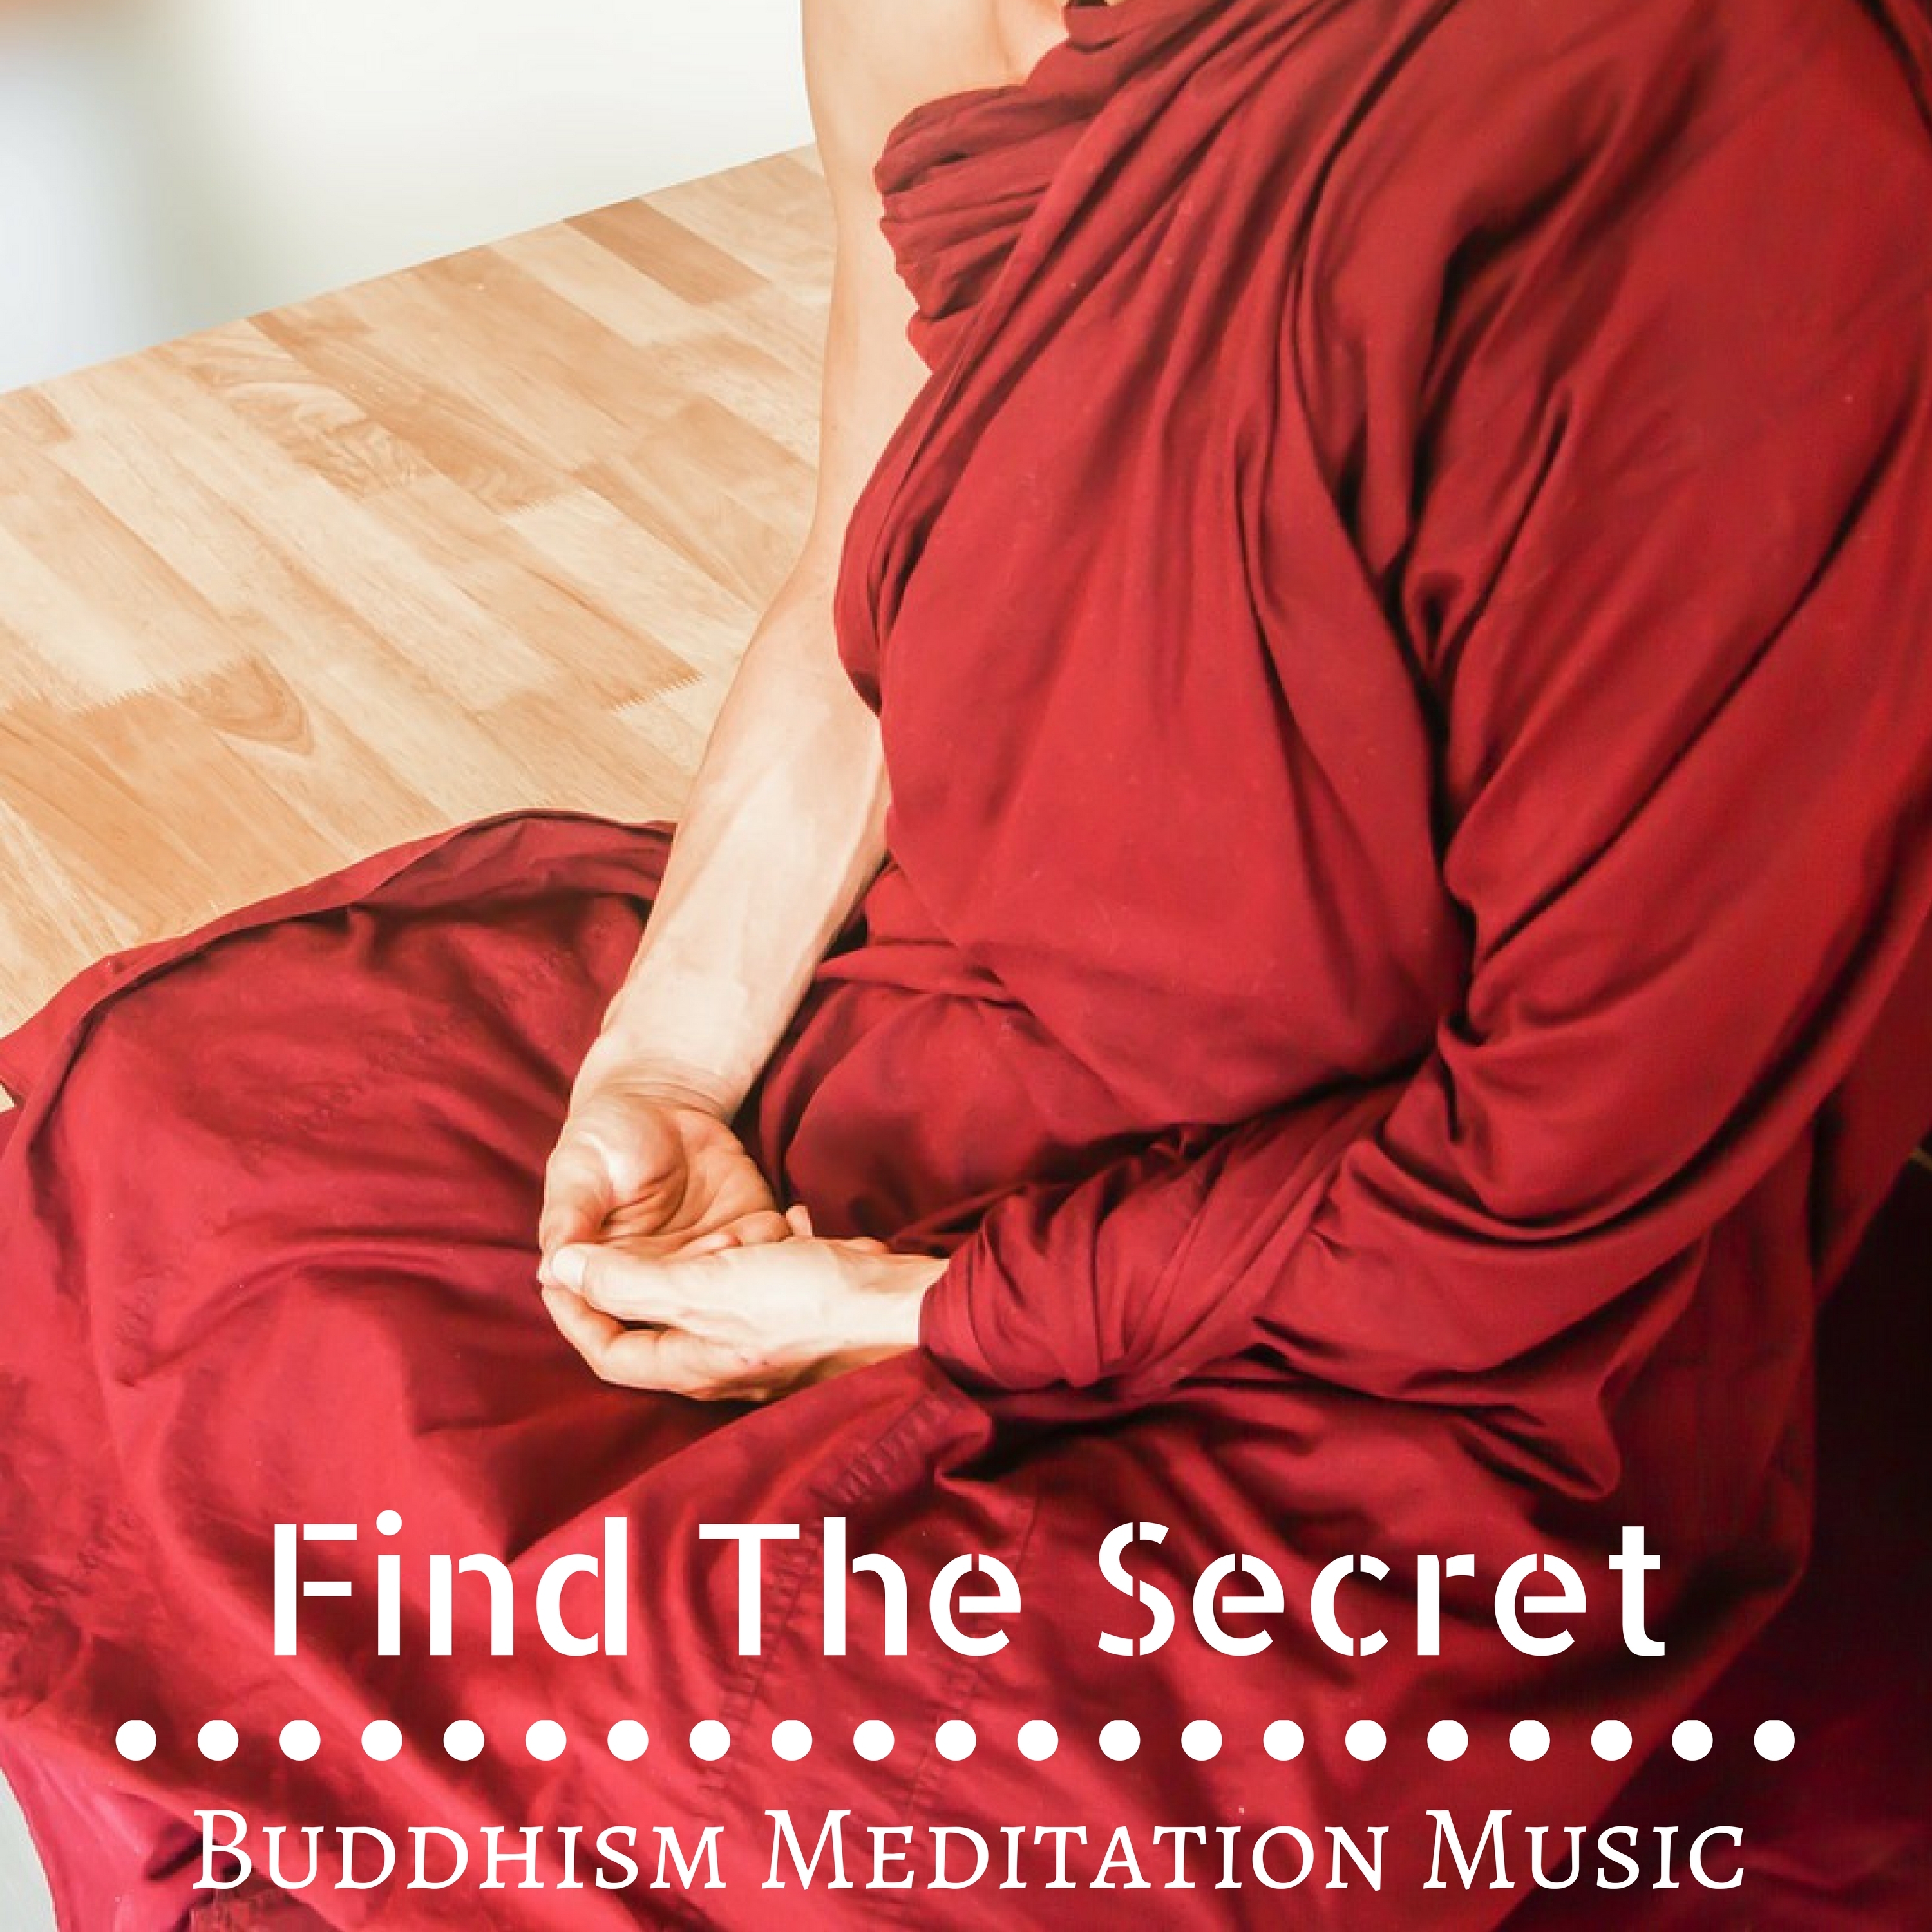 Find The Secret: Buddhism Meditation Music with Zen Nature Instrumental Sounds